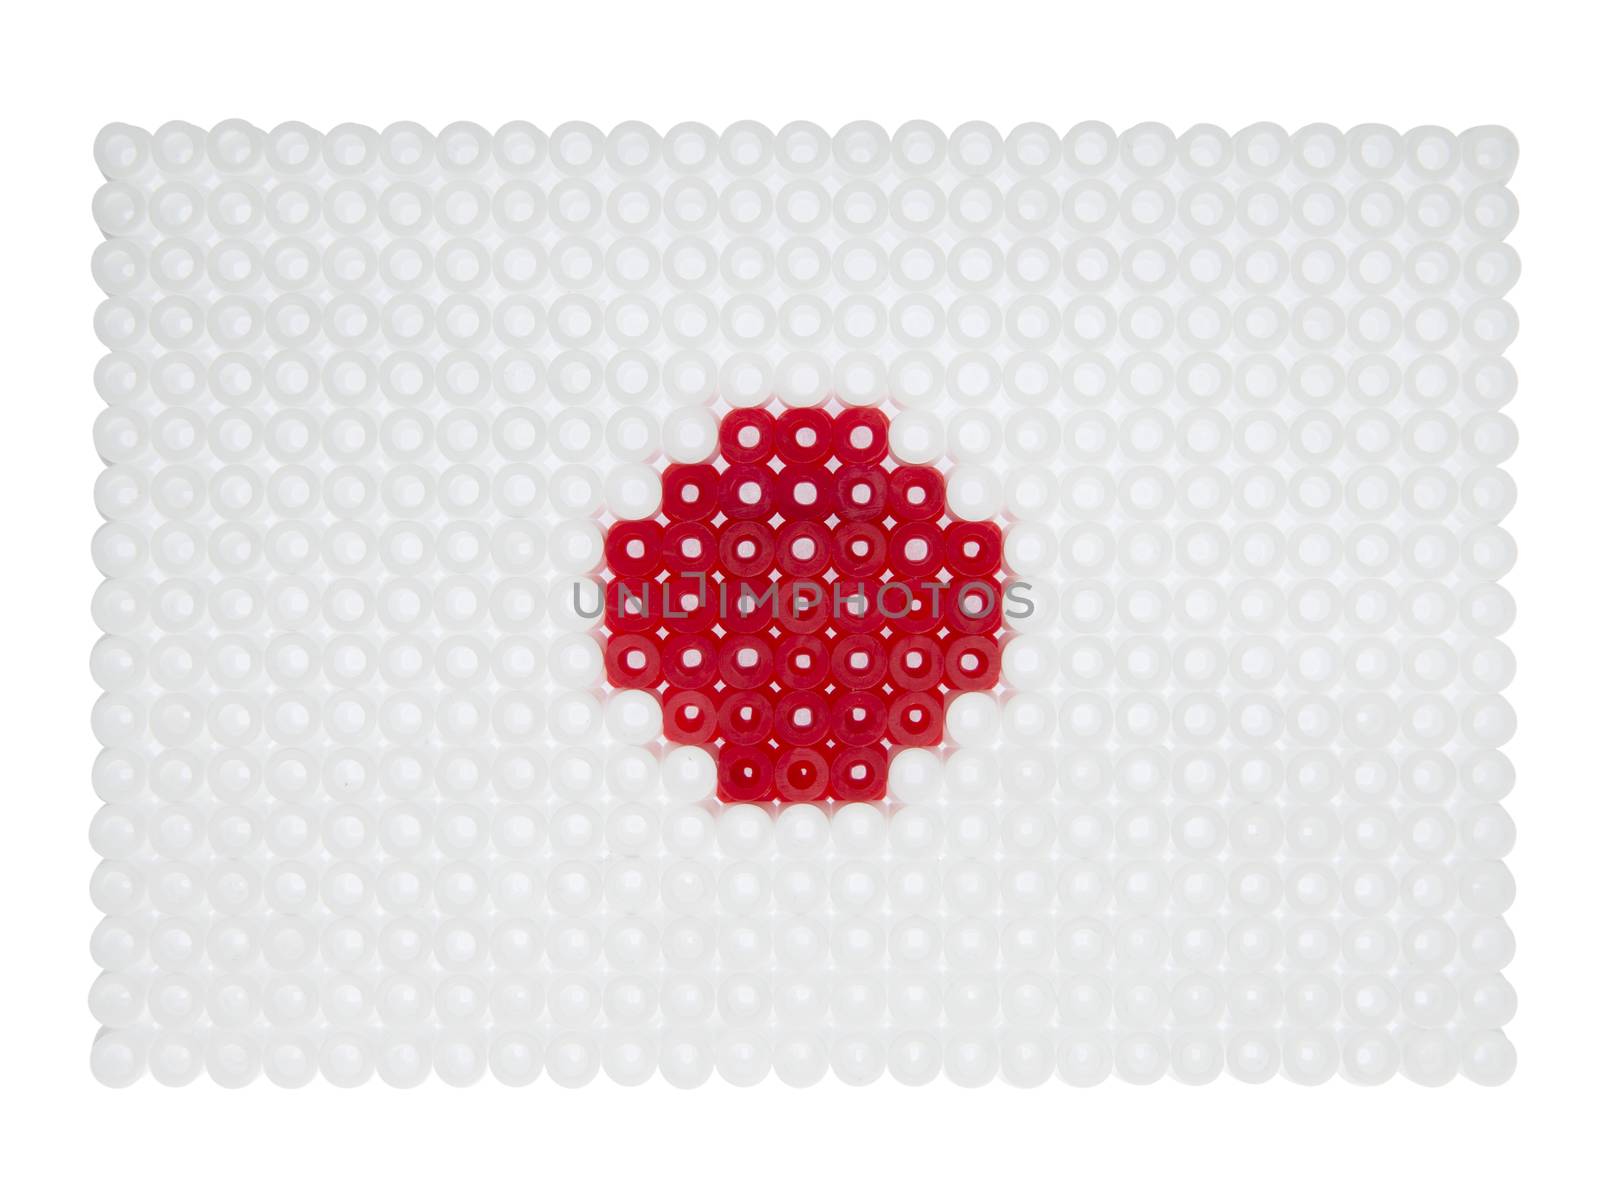 Flag of Japan by gemenacom